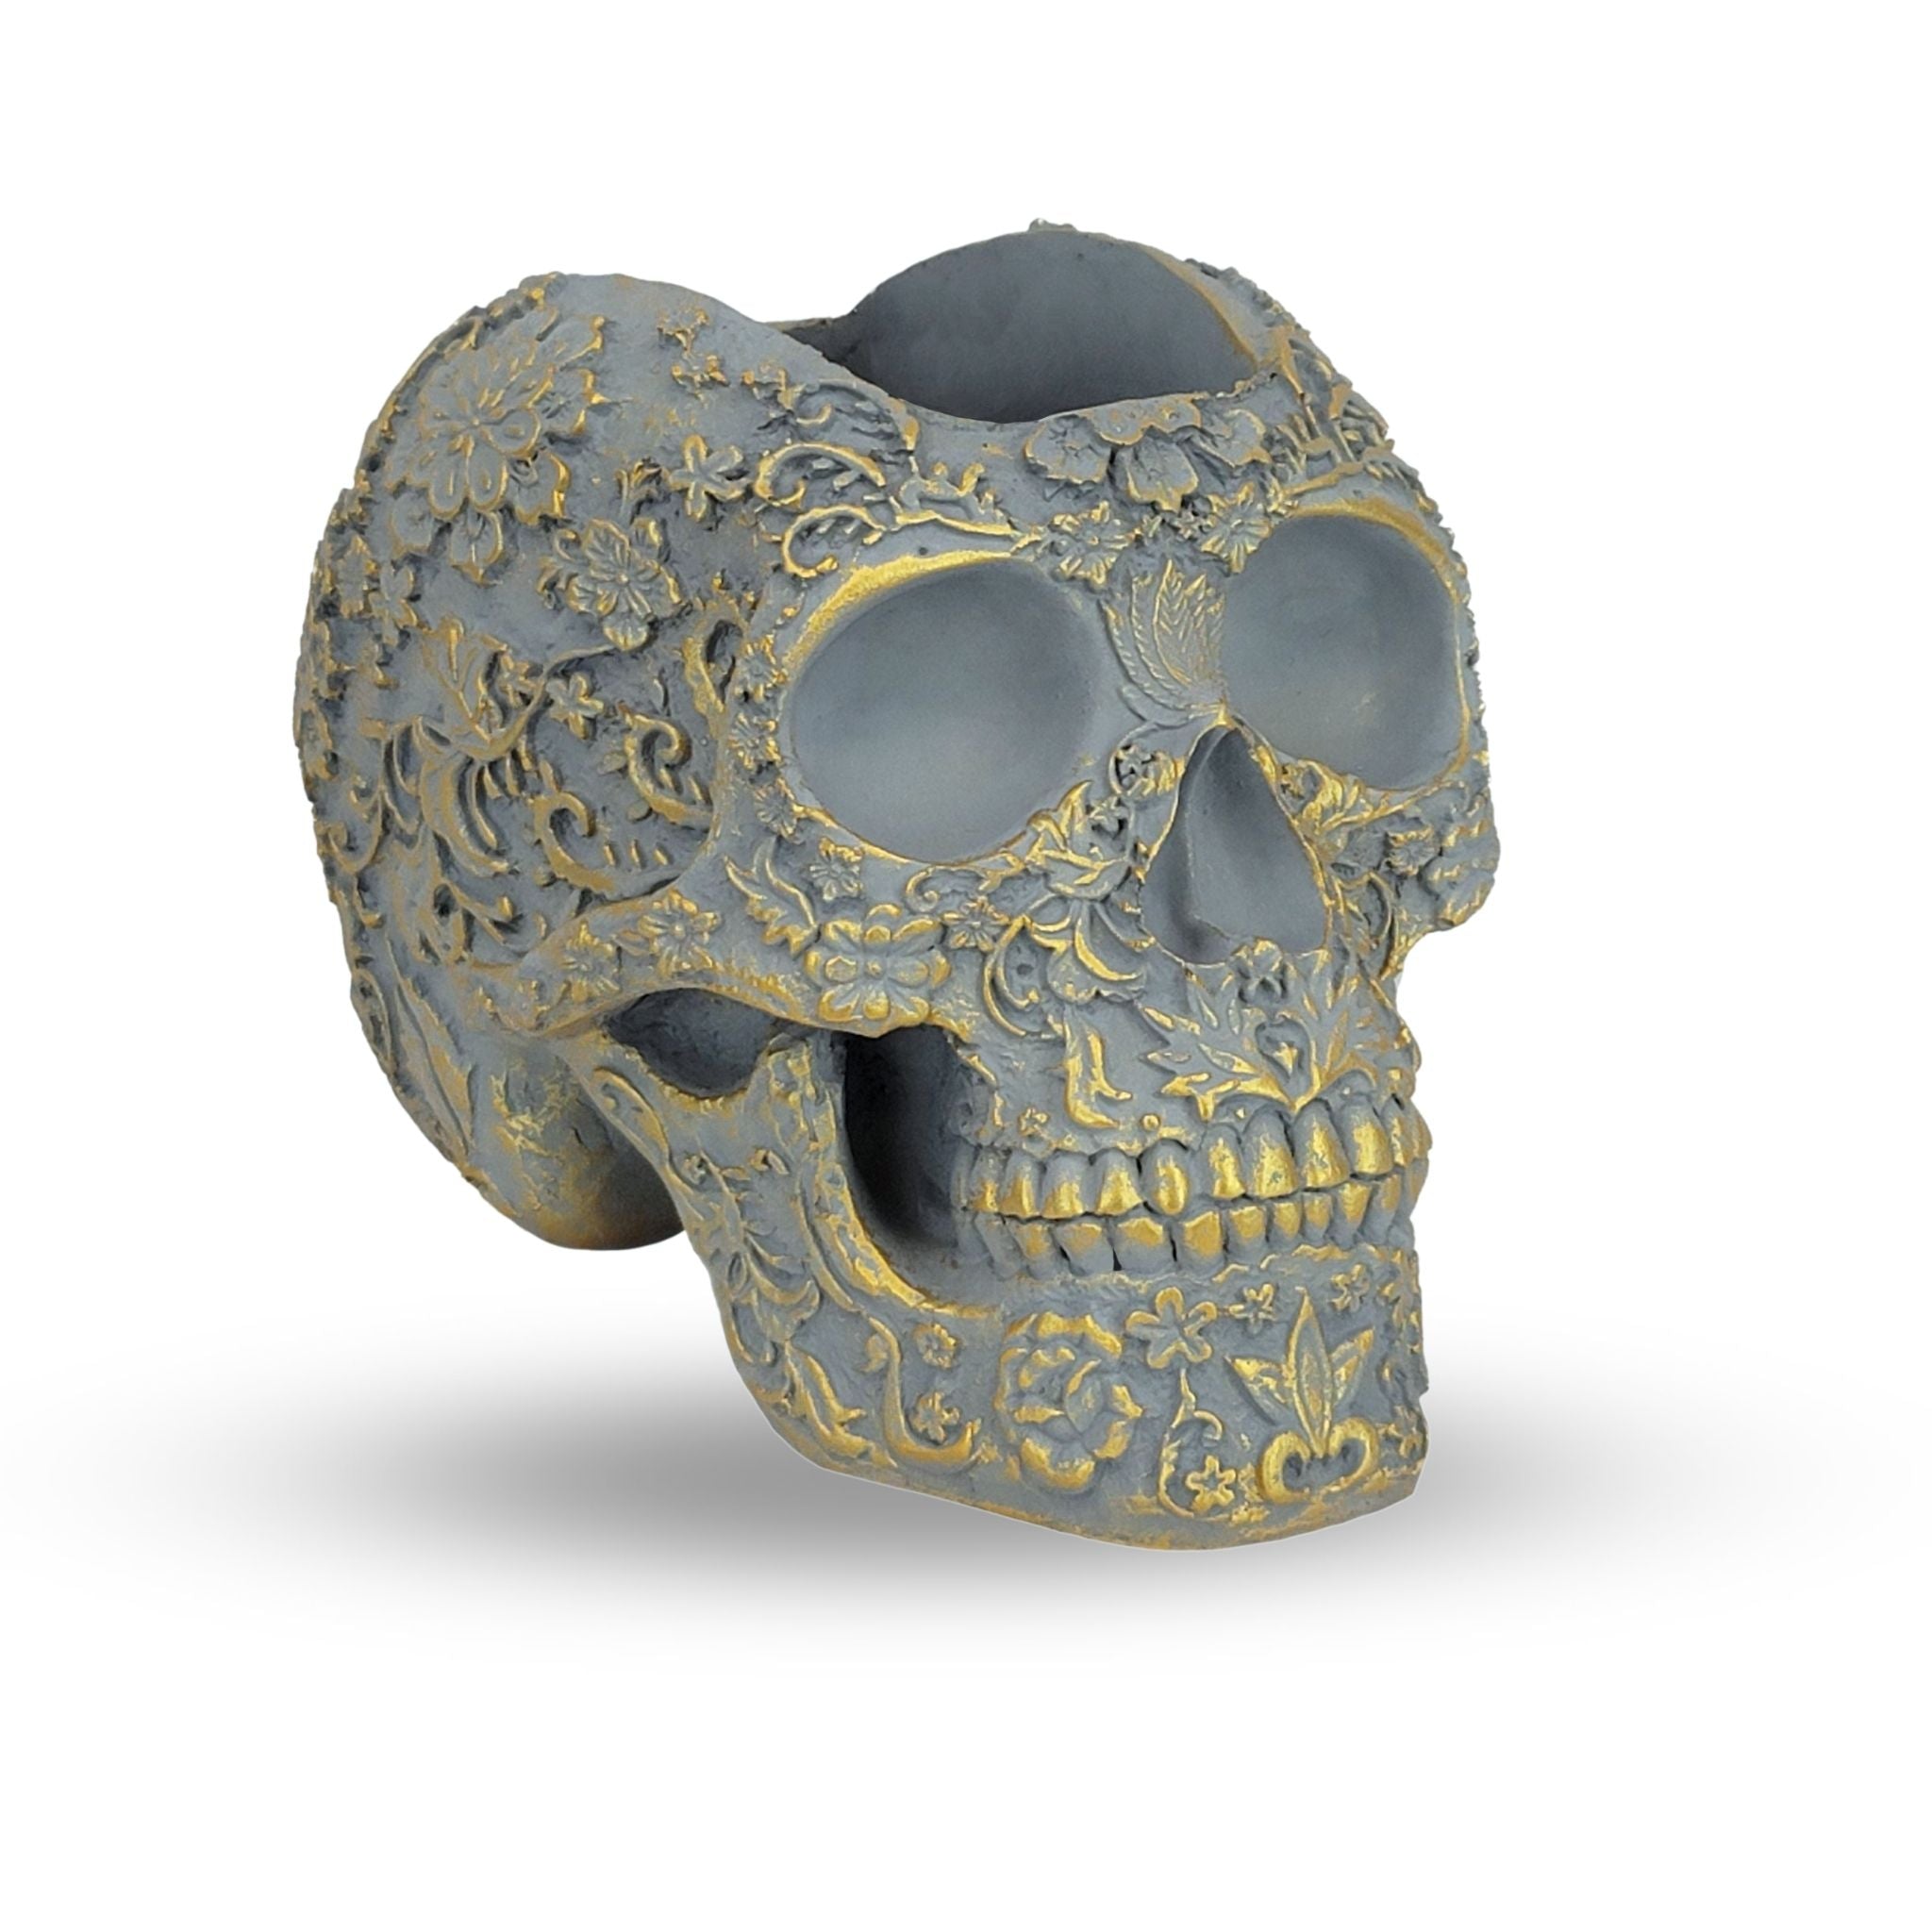 Mohawk Skull Planter - Gray-Gold